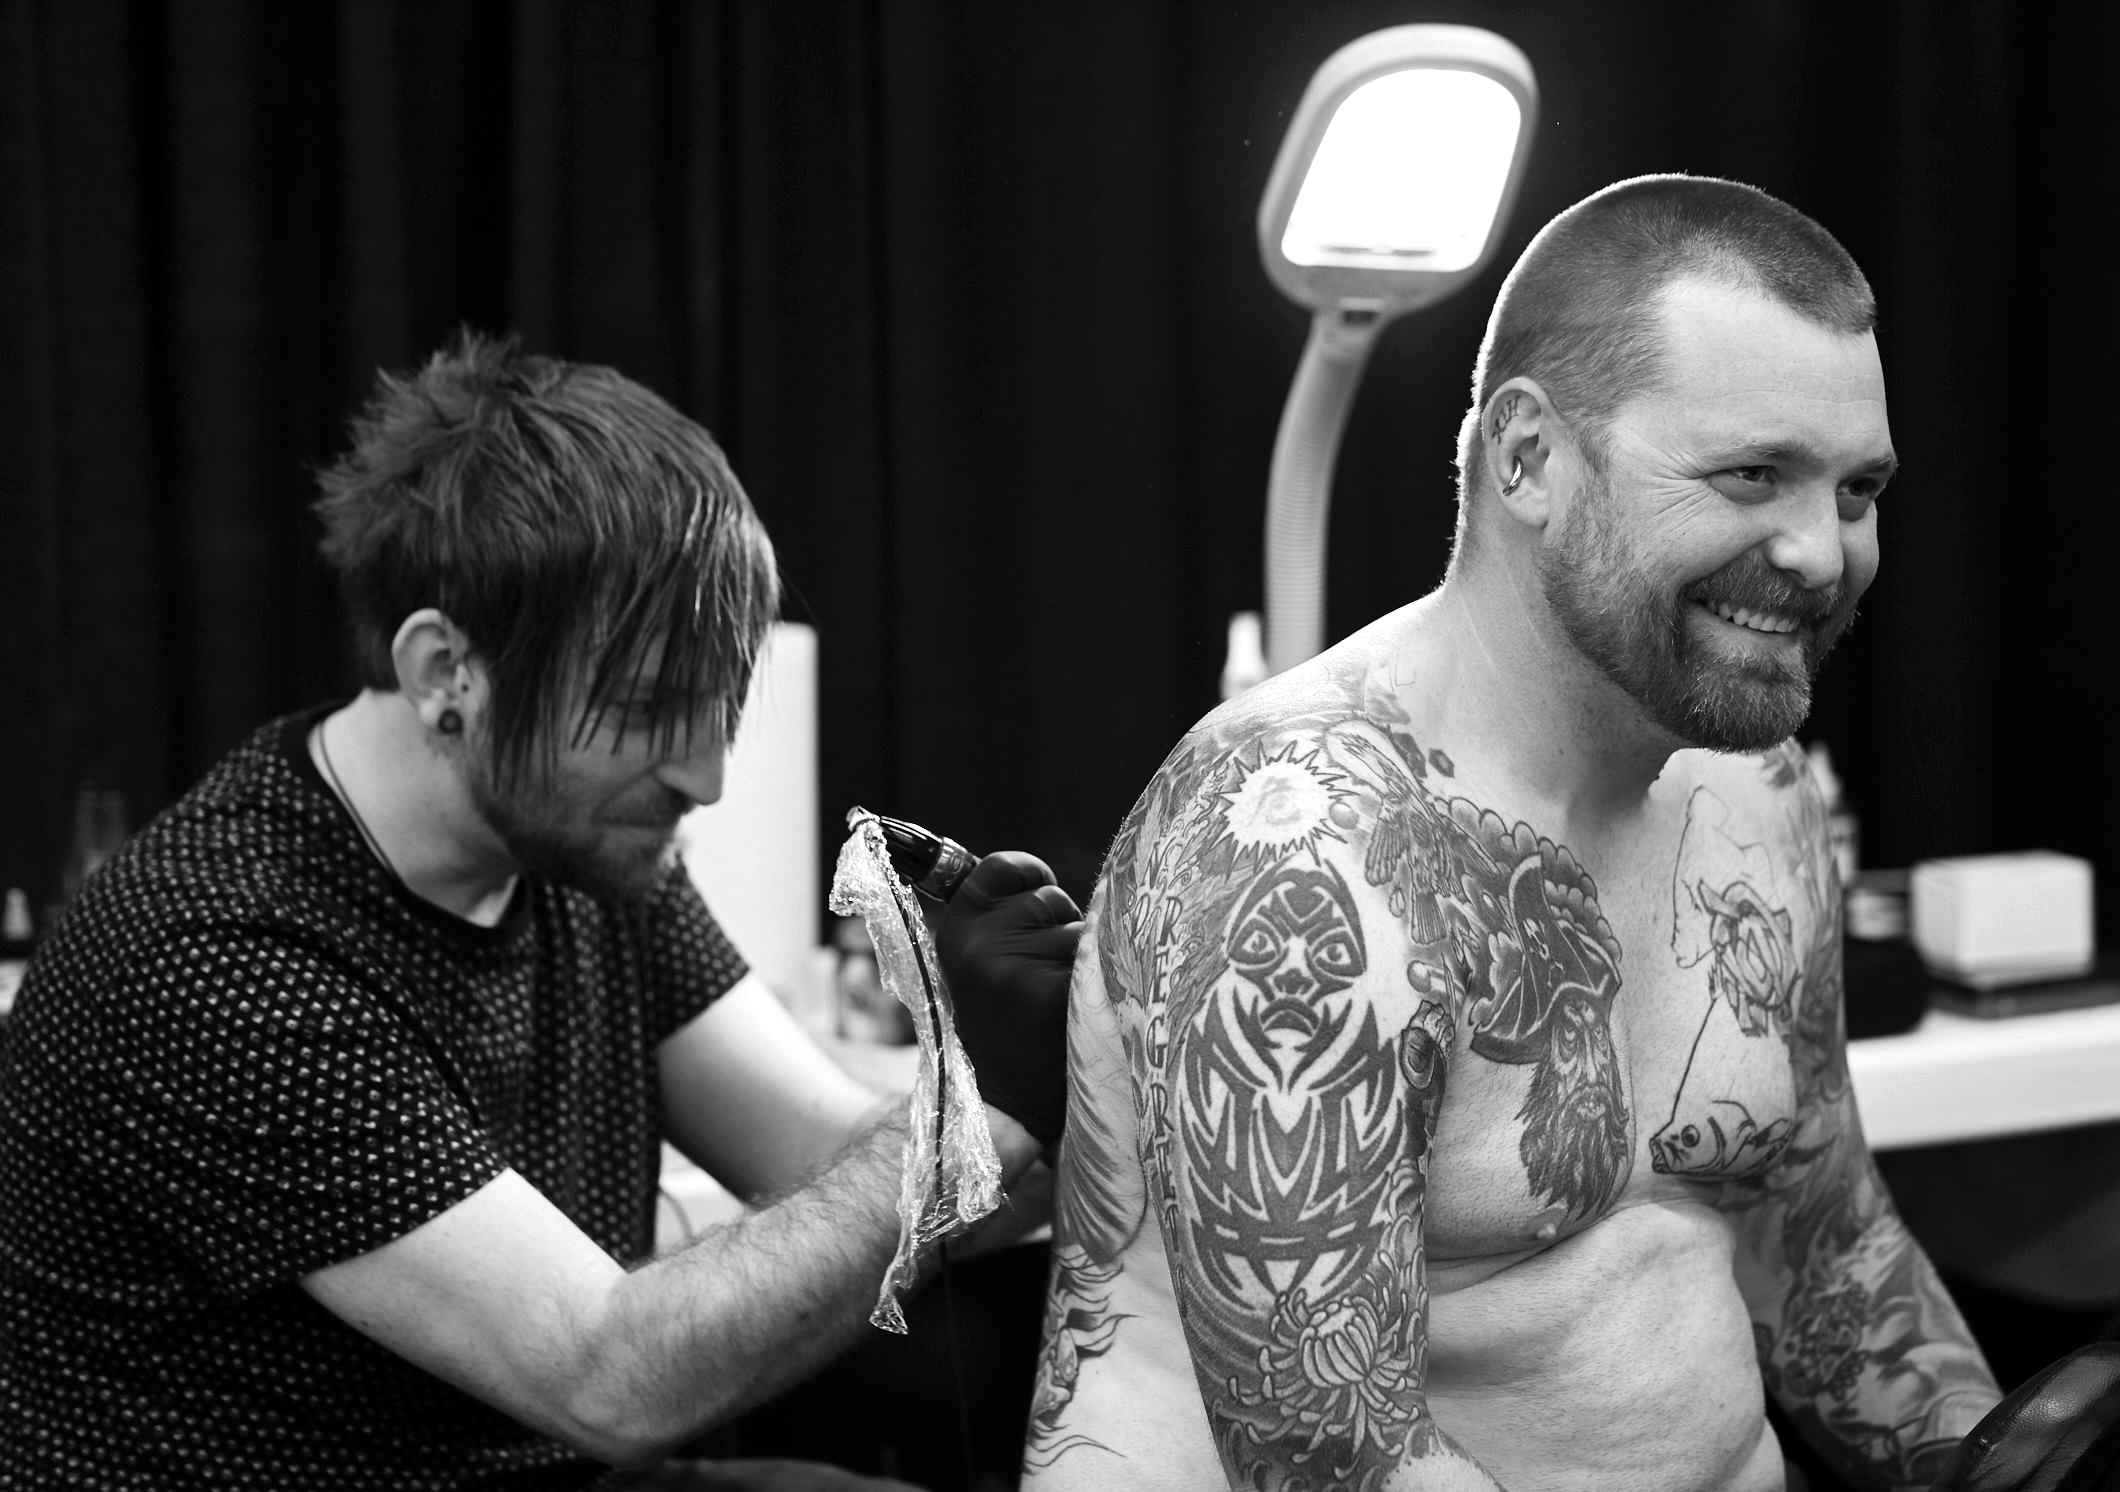 Meet Michael Gordon | Tattoo Artist Licensed Private Studio - SHOUTOUT DFW